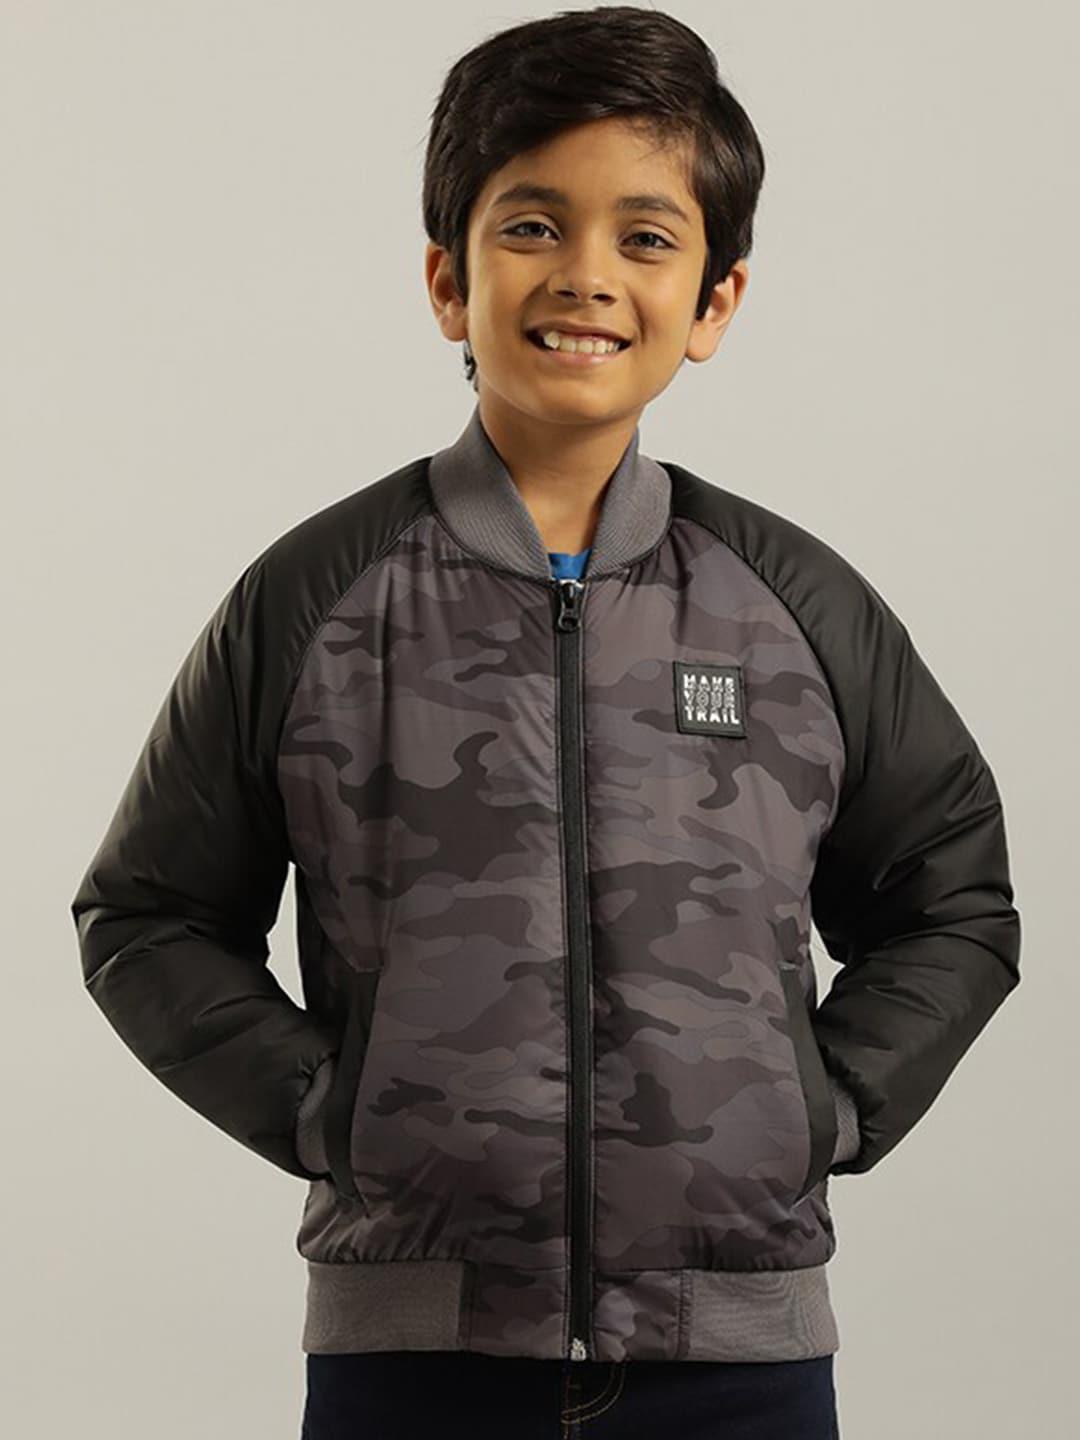 indian terrain boys black lightweight long sleeves outdoor fashion jacket